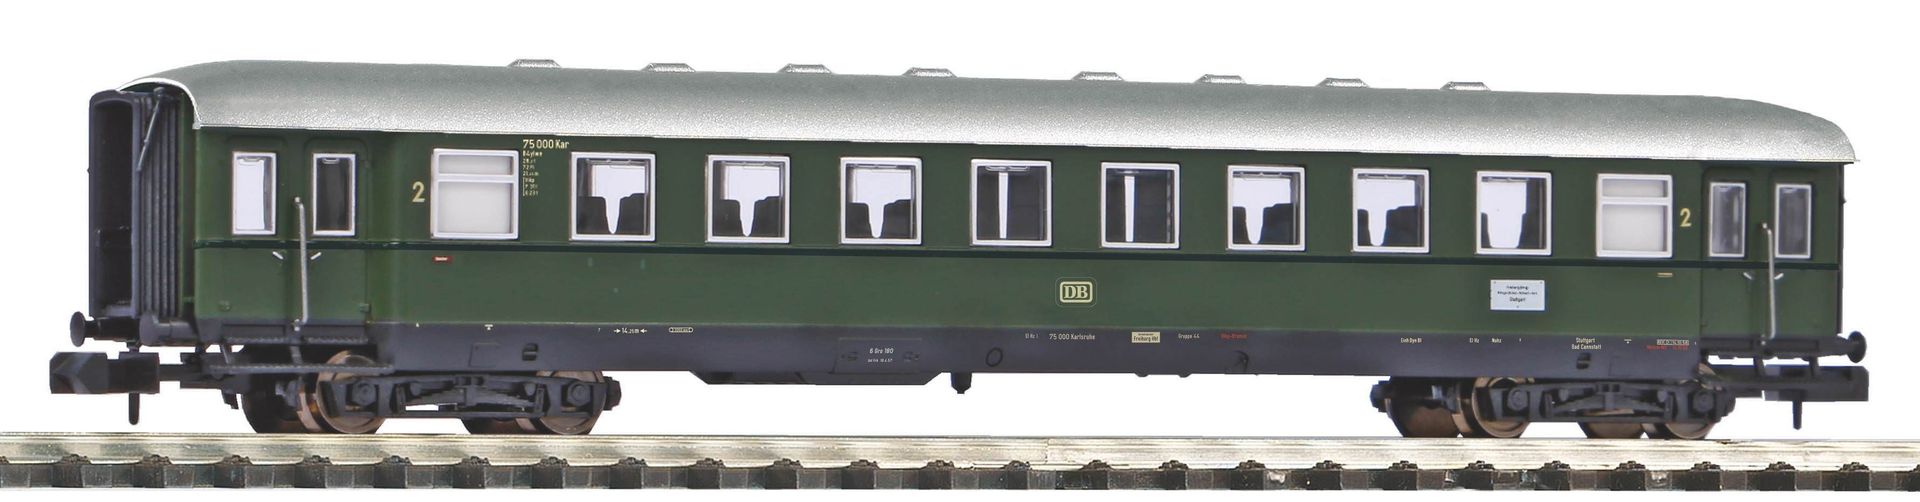 Piko 40624 - Schürzeneilzugwagen DB Ep.III 2. Kl. N 1:160